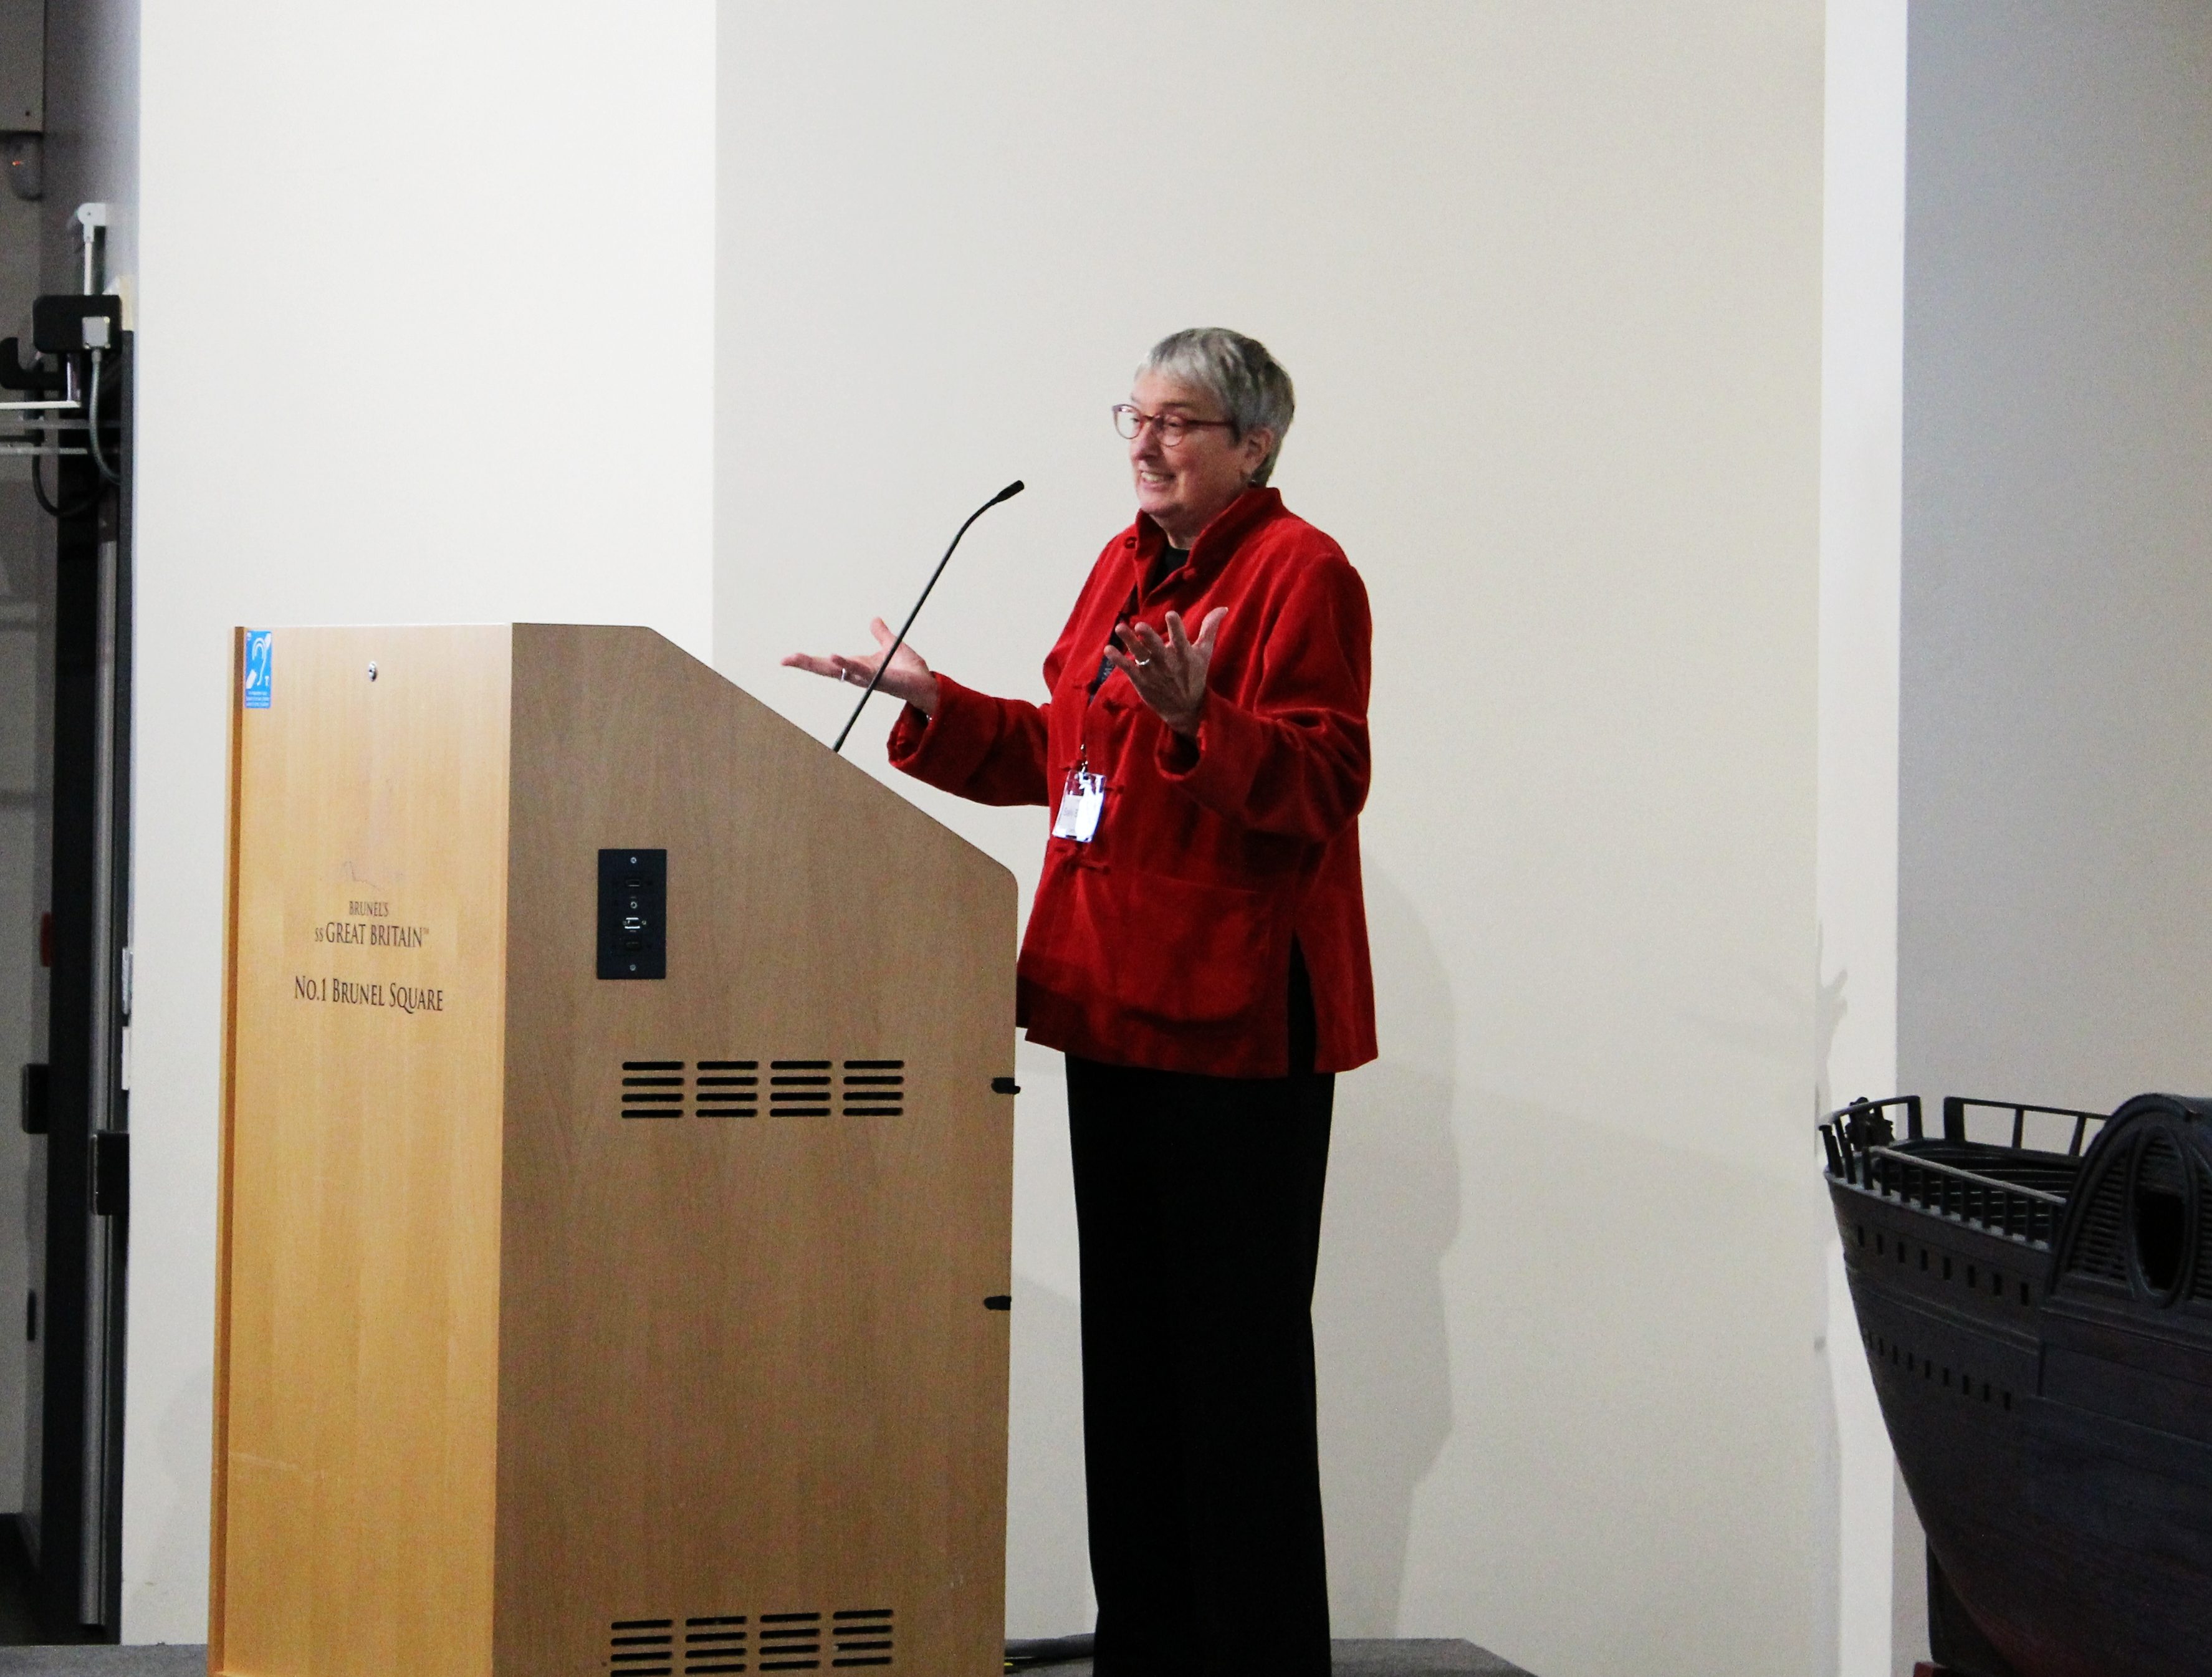 Professor Sally Barnes Opens the Conference